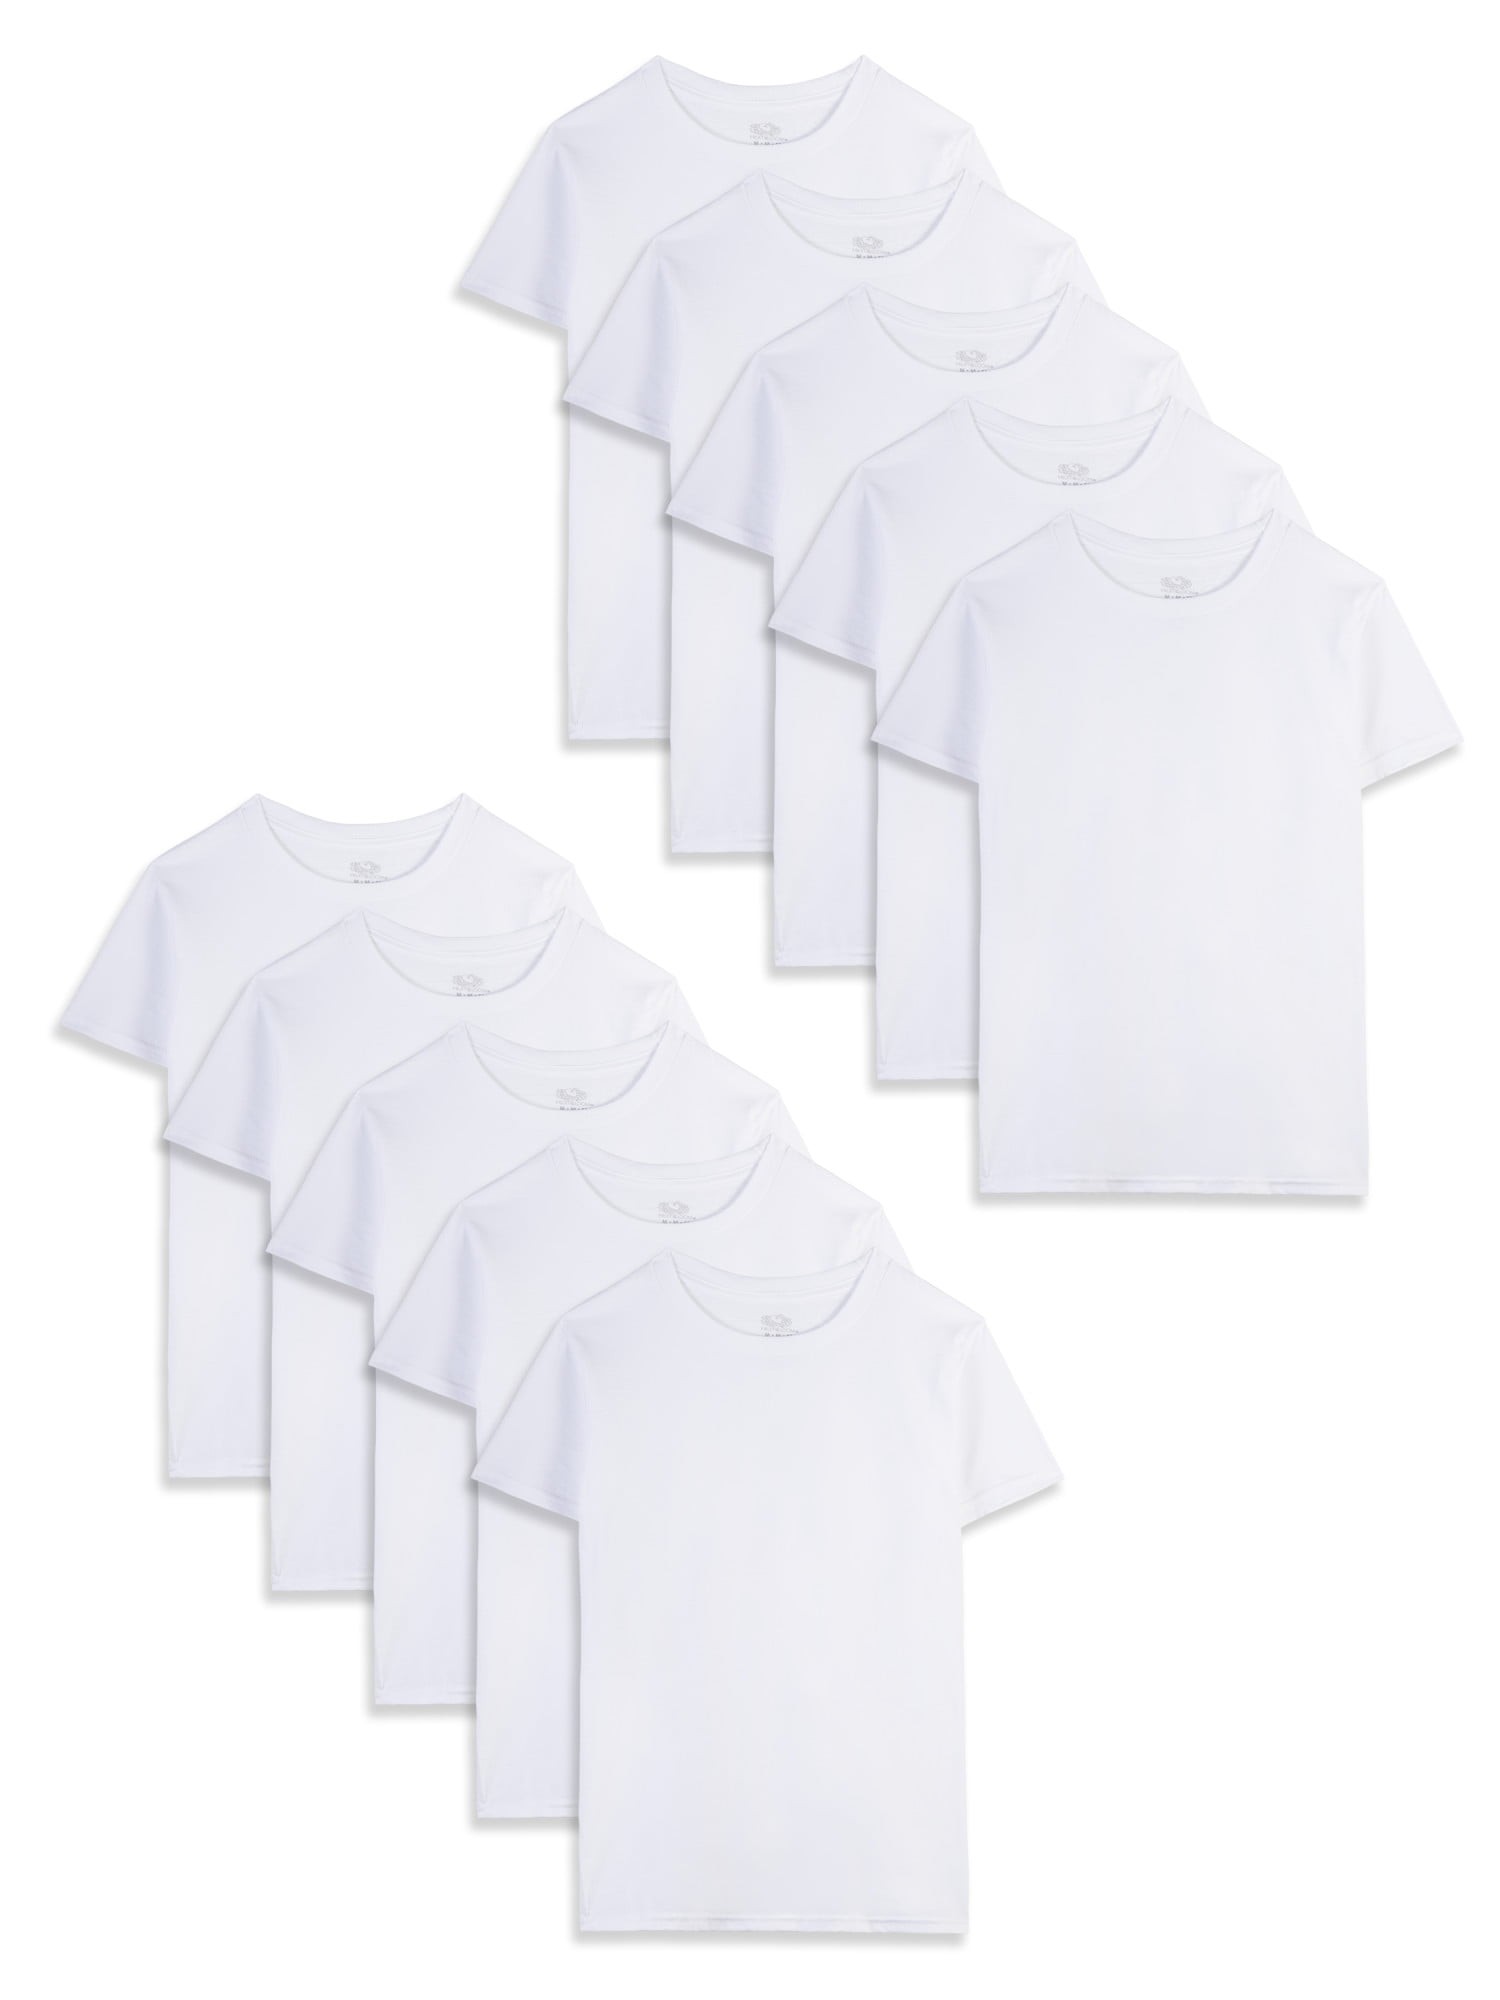 Mejores ofertas e historial de precios de Fruit of the Loom Boys  Undershirts, 10 Pack White Cotton Crew T-Shirts, Husky en